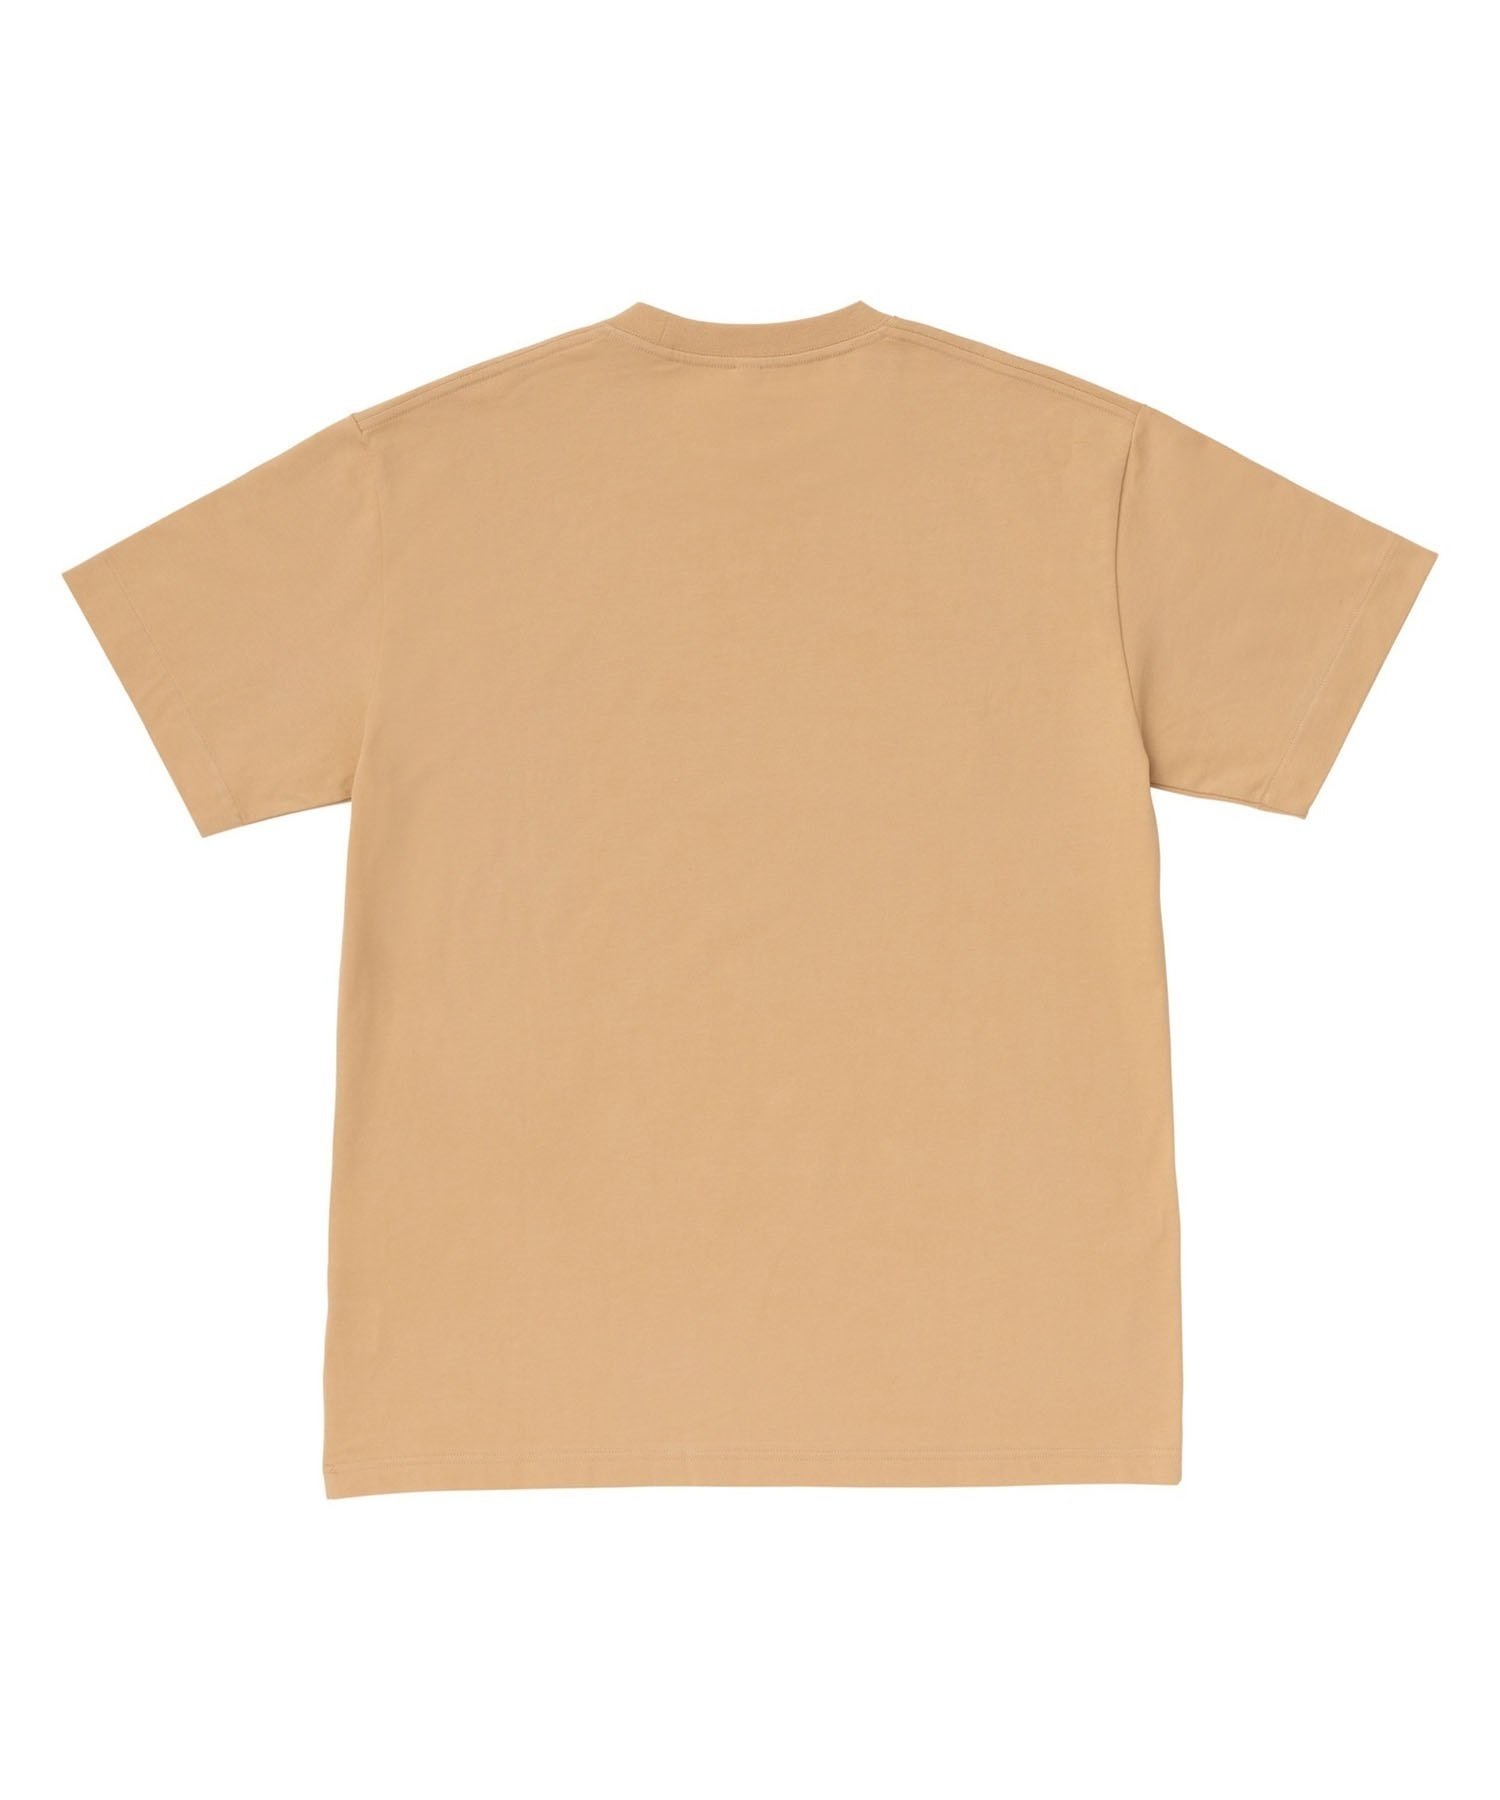 KEEN/キーン OC/RP KEEN LOGO TEE DAY メンズ Tシャツ 半袖 1028270(CROI-S)